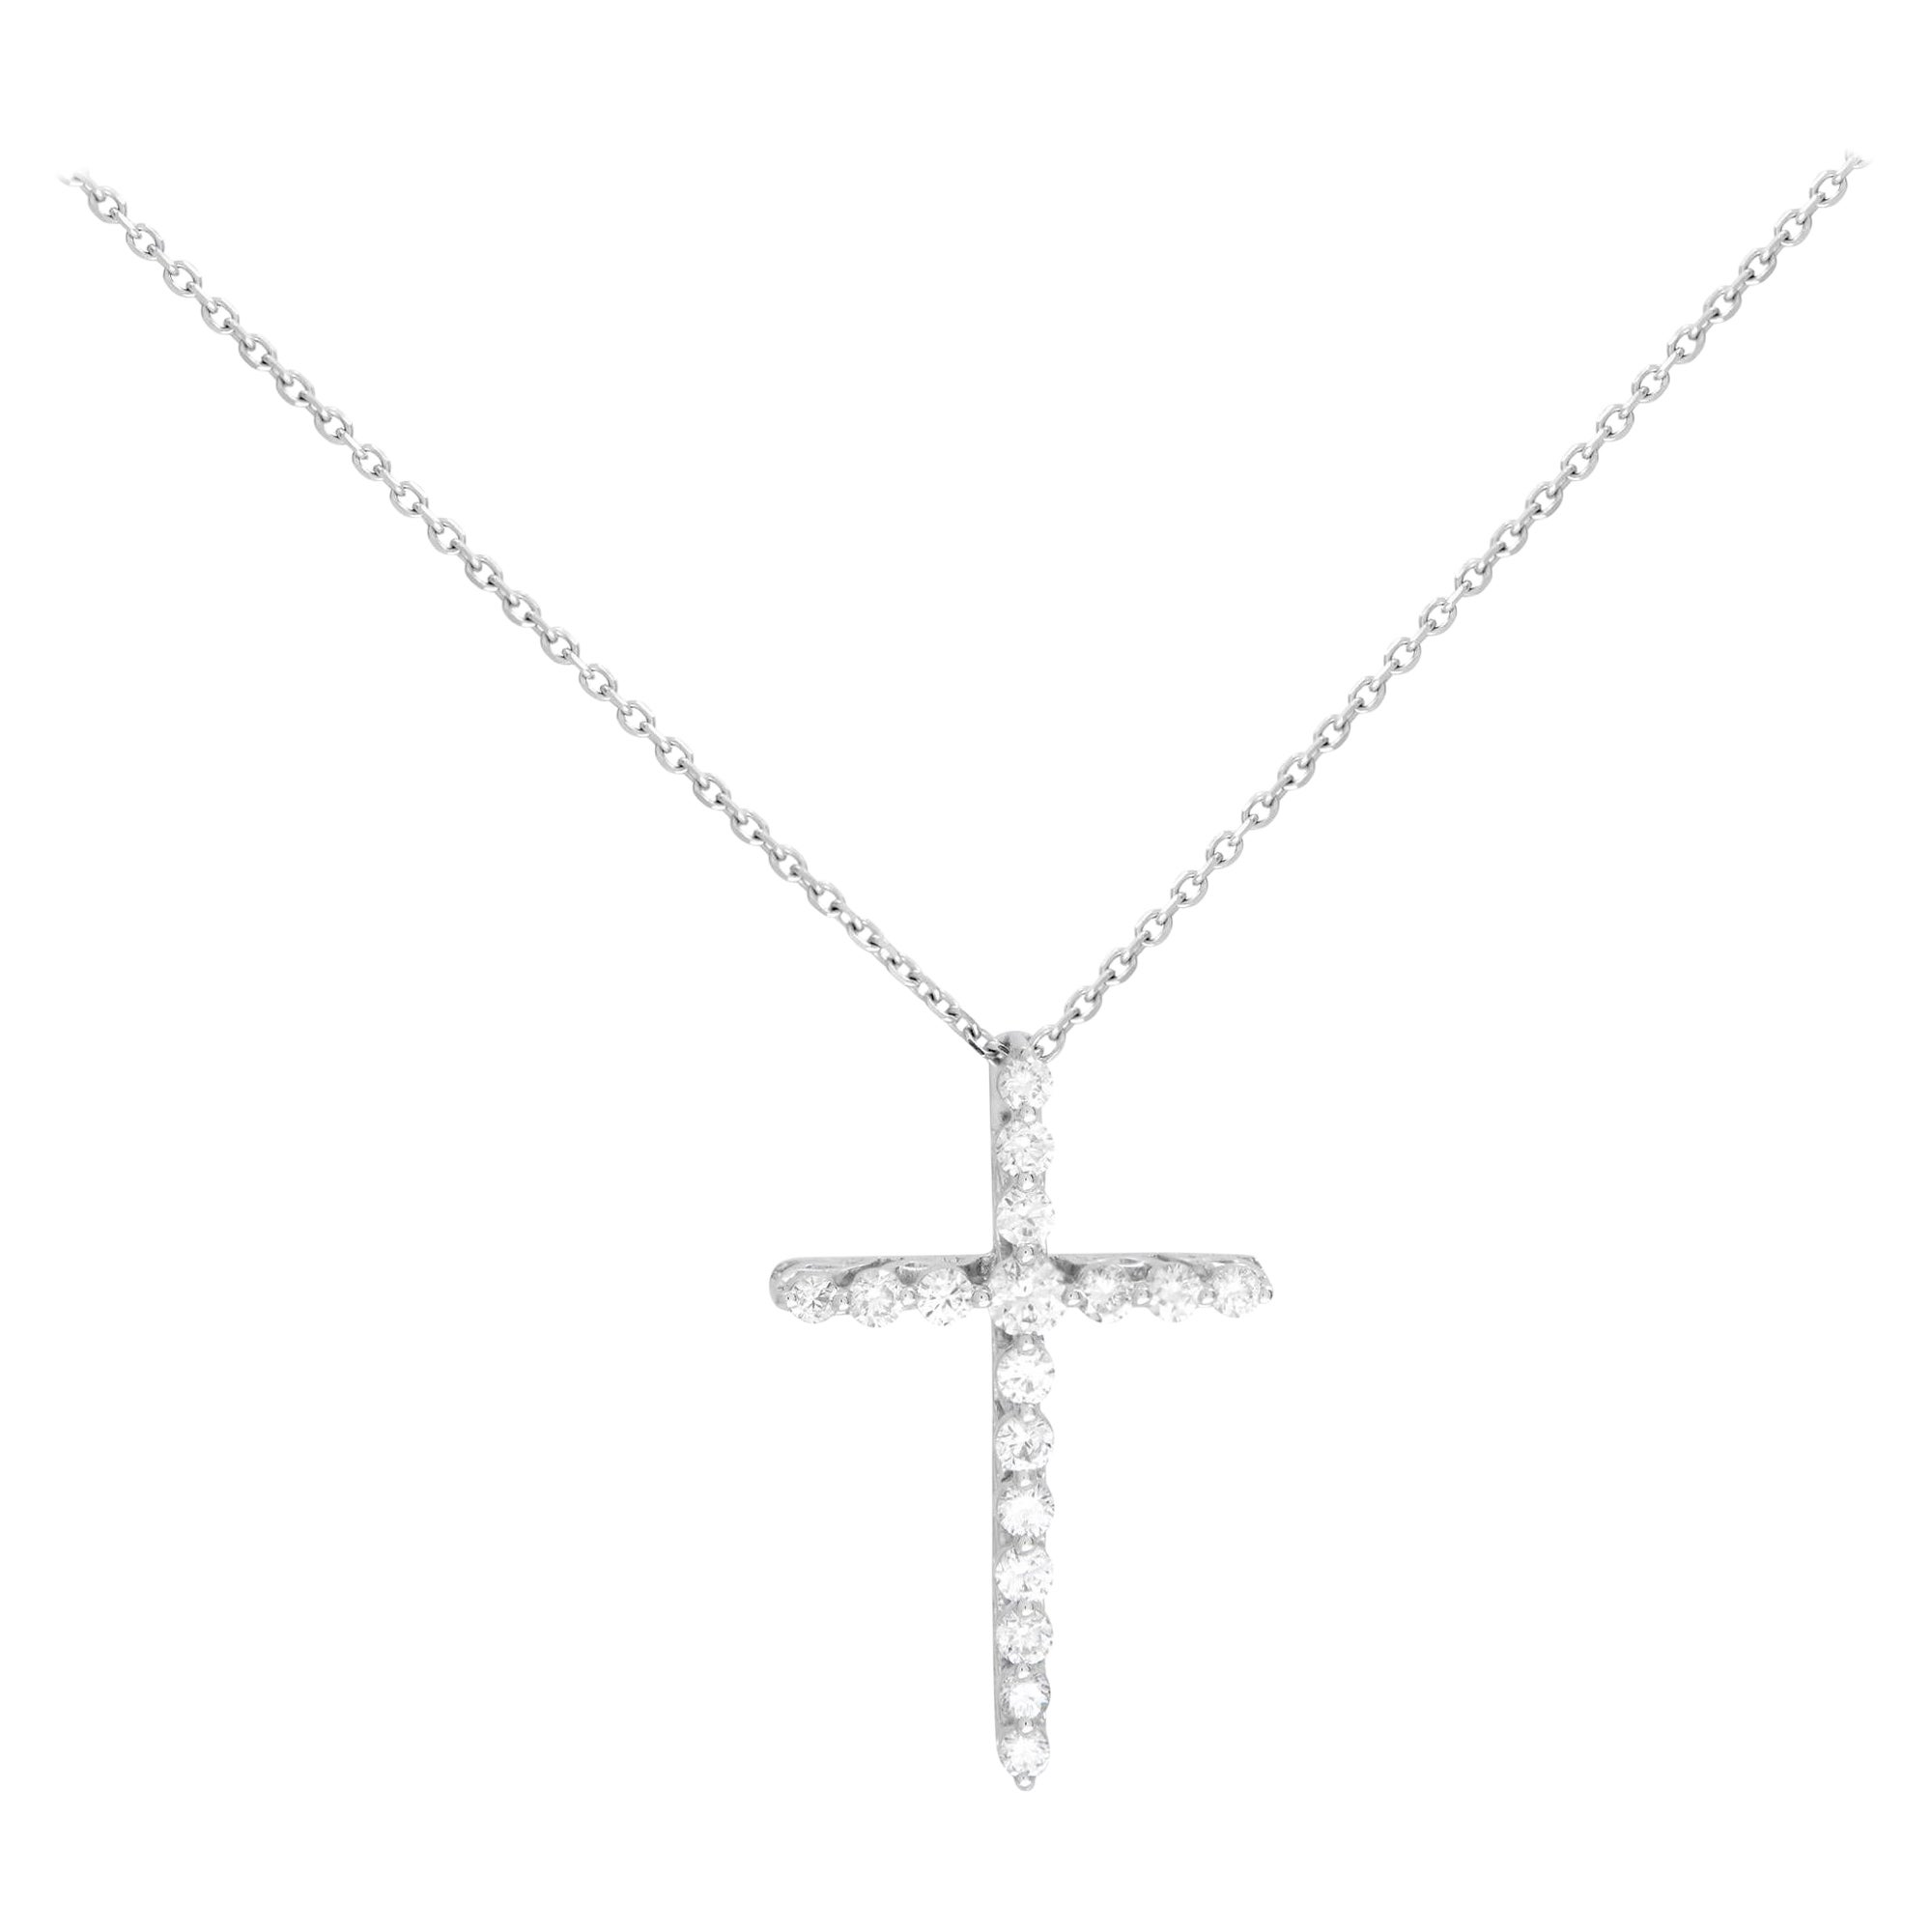 Rachel Koen 18k White Gold Diamond Ladies Cross Pendant Necklace 0.50cttw For Sale